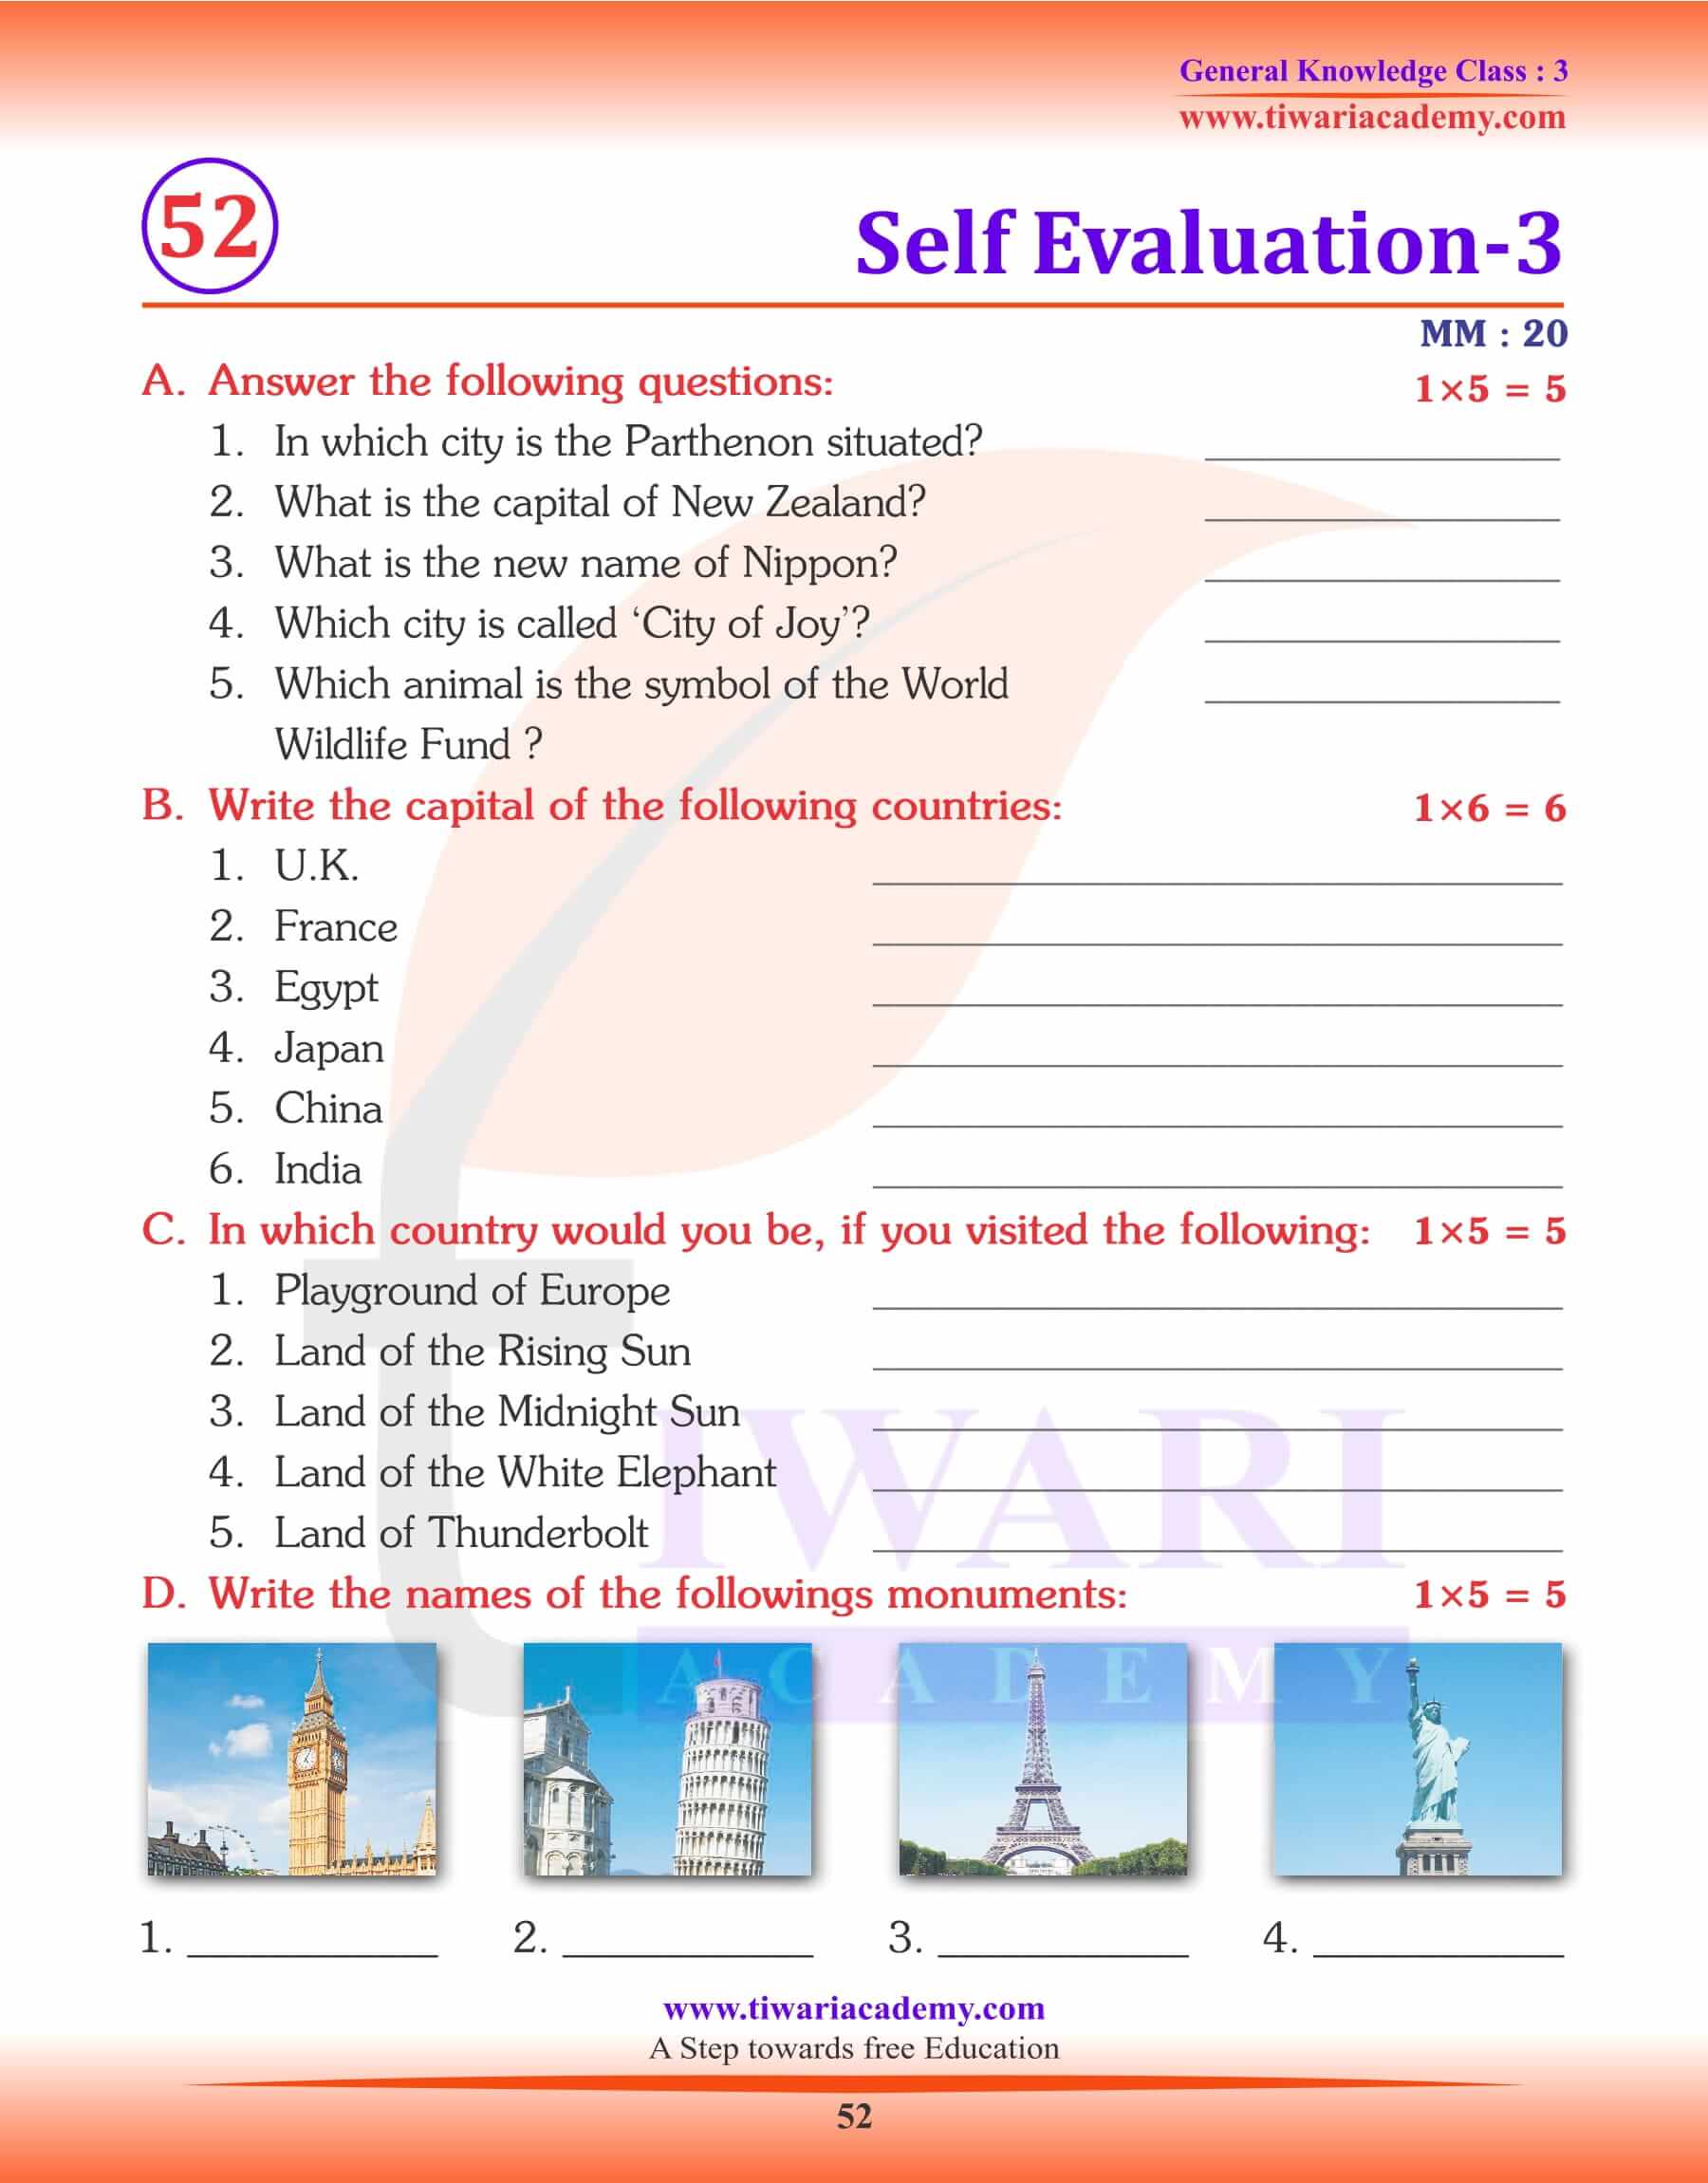 Self Evaluation GK Test 4